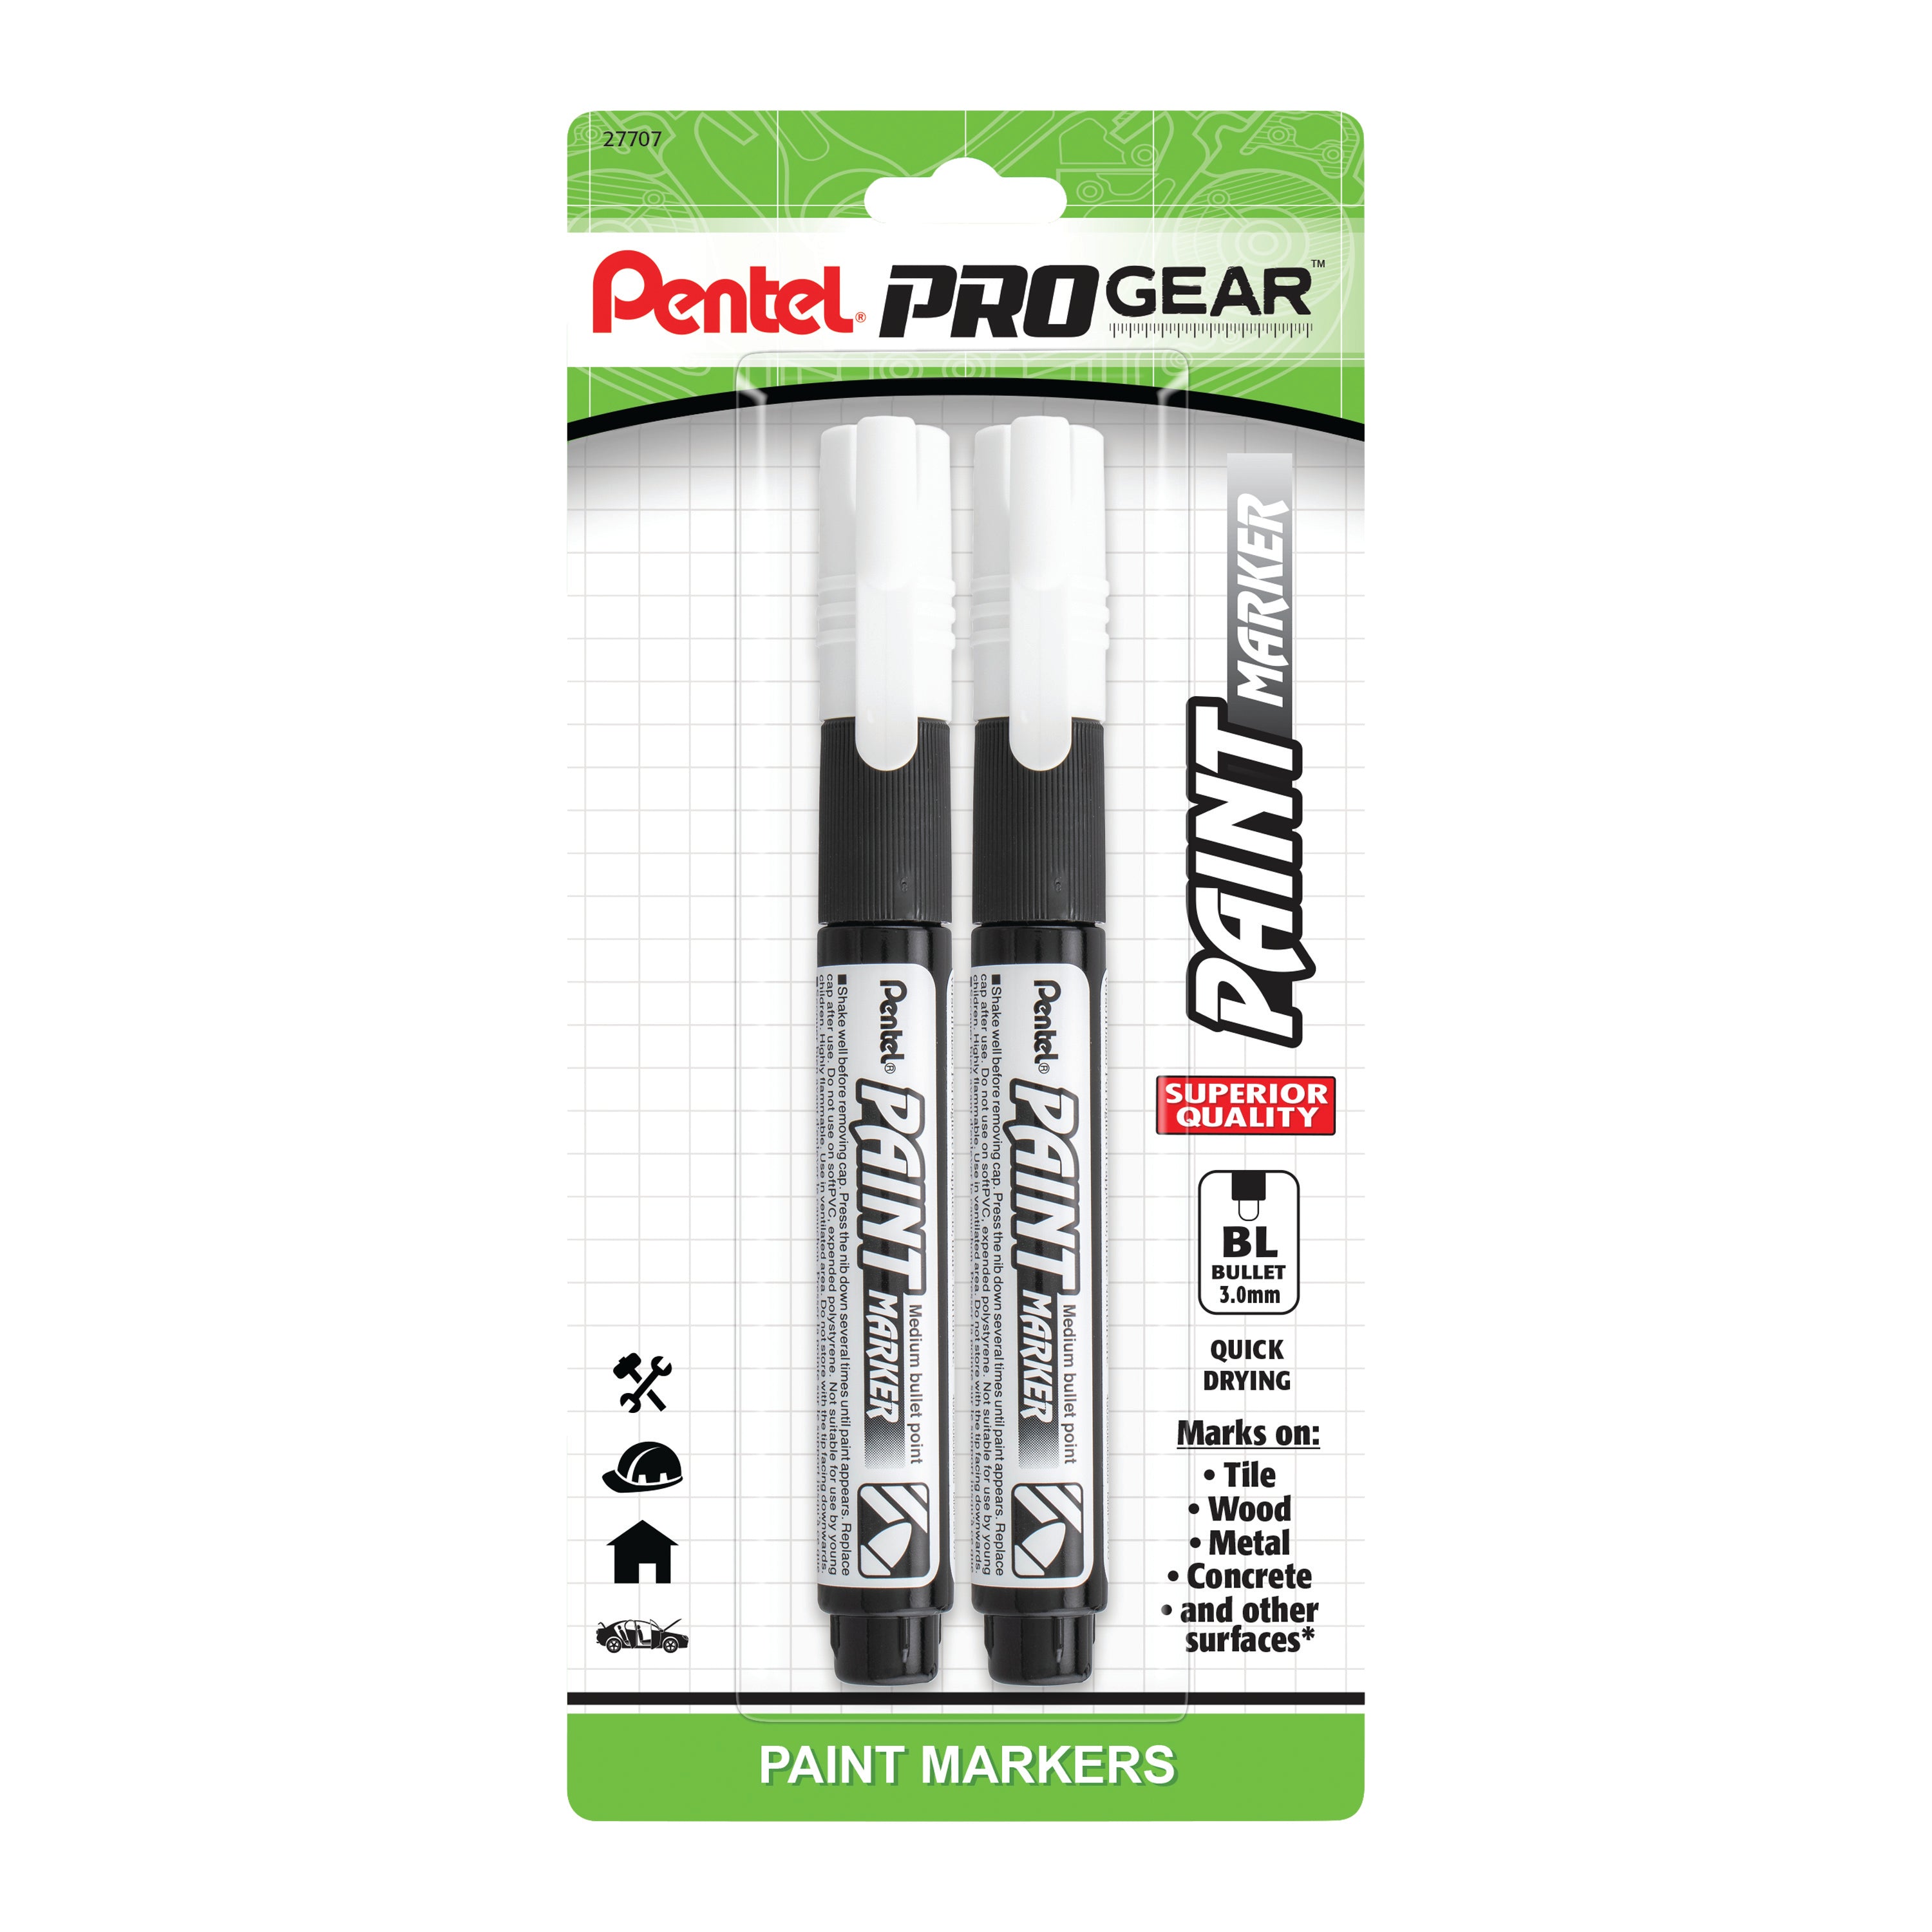 Pentel ProGear油漆标记，白色墨水，2-pks